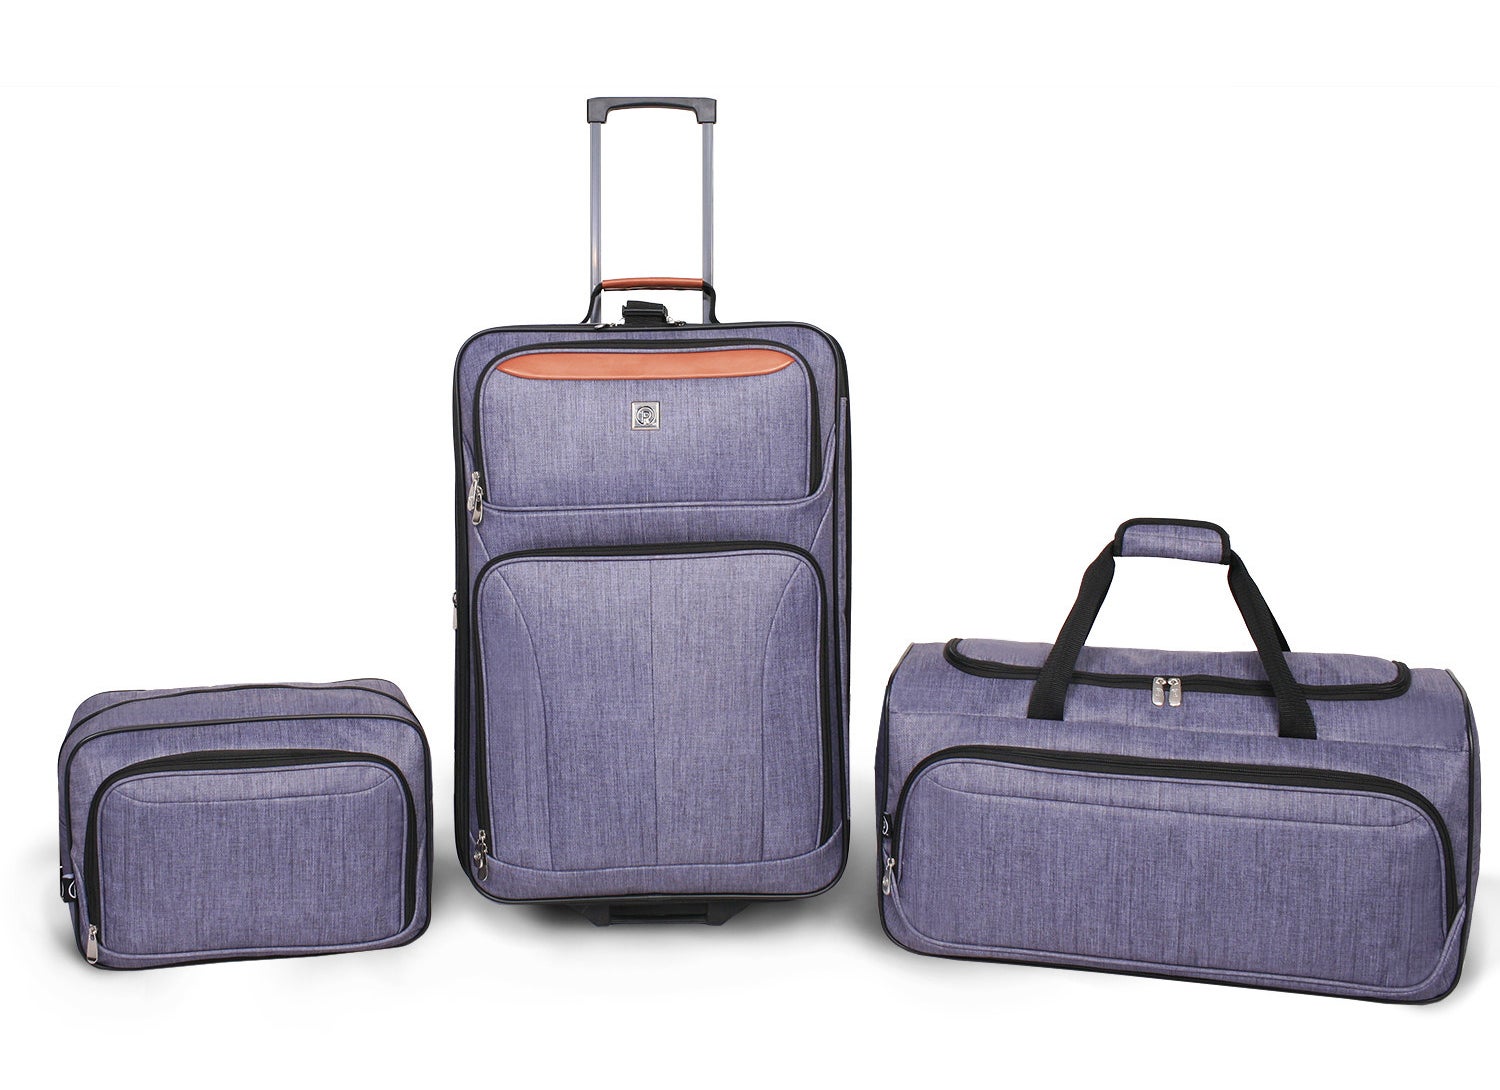 An image of a grey, three-piece luggage set